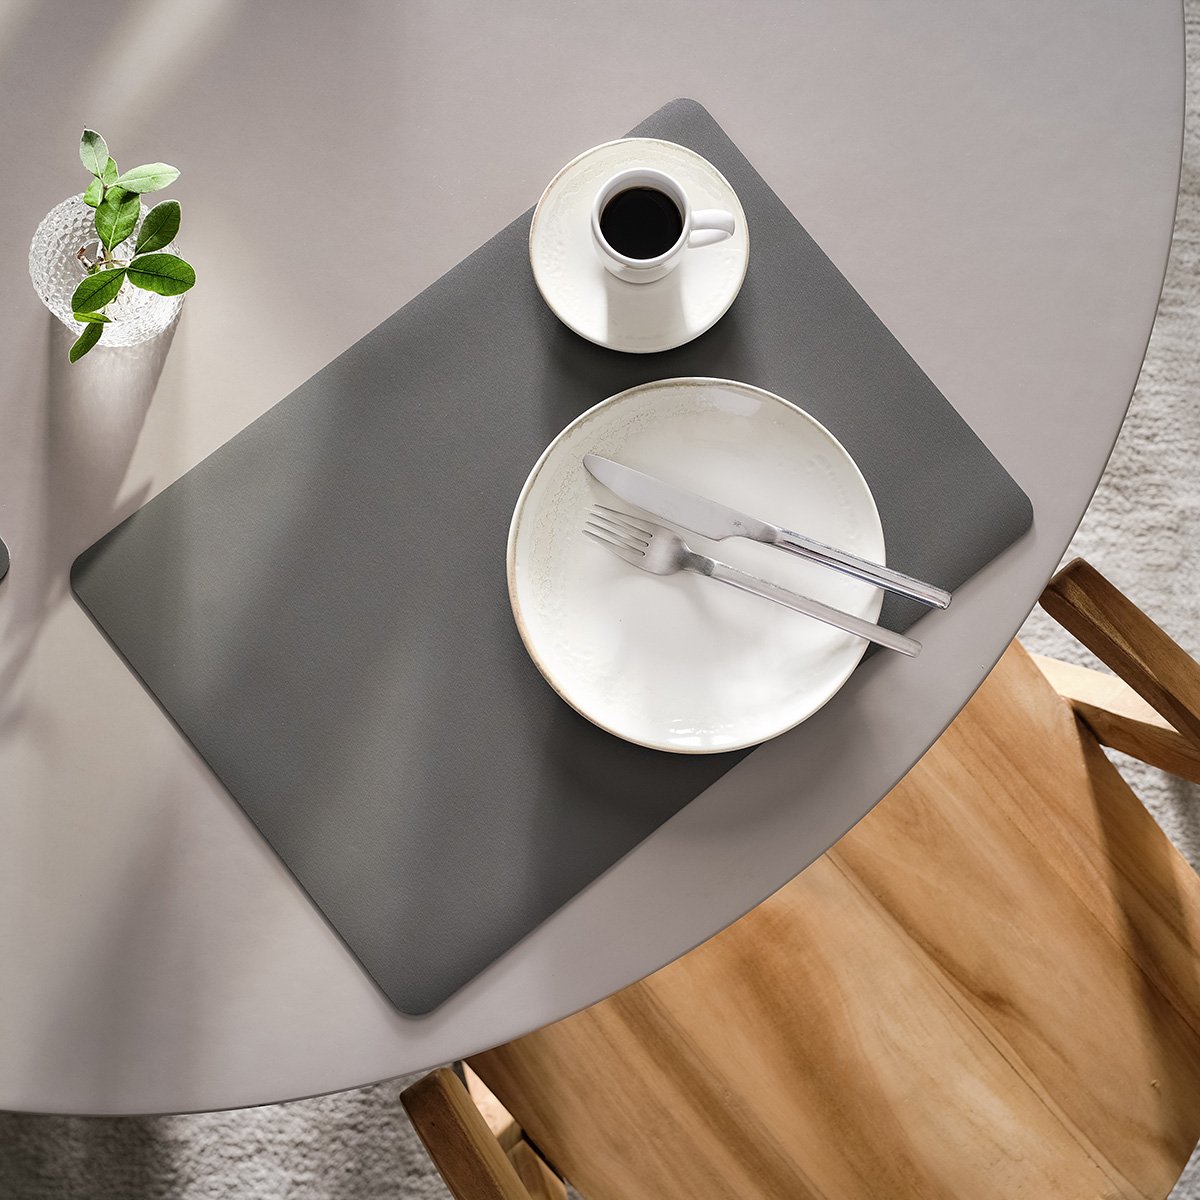 Neva Σουπλά Graphite Black πάνω σε τραπέζι με πιάτο